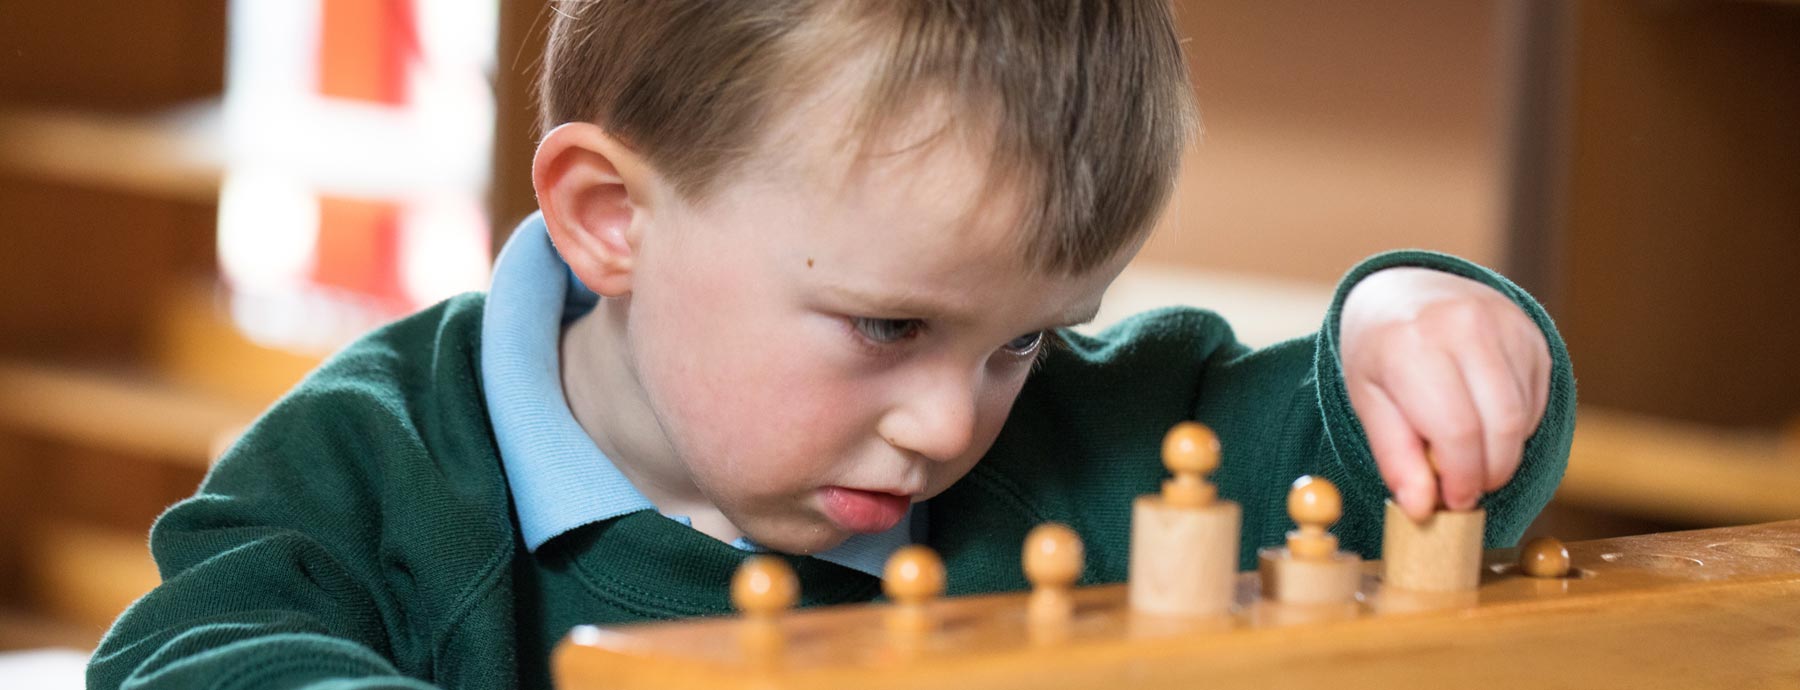 Young child focused on putting pegs into holes (Grantham Farm Montessori School)